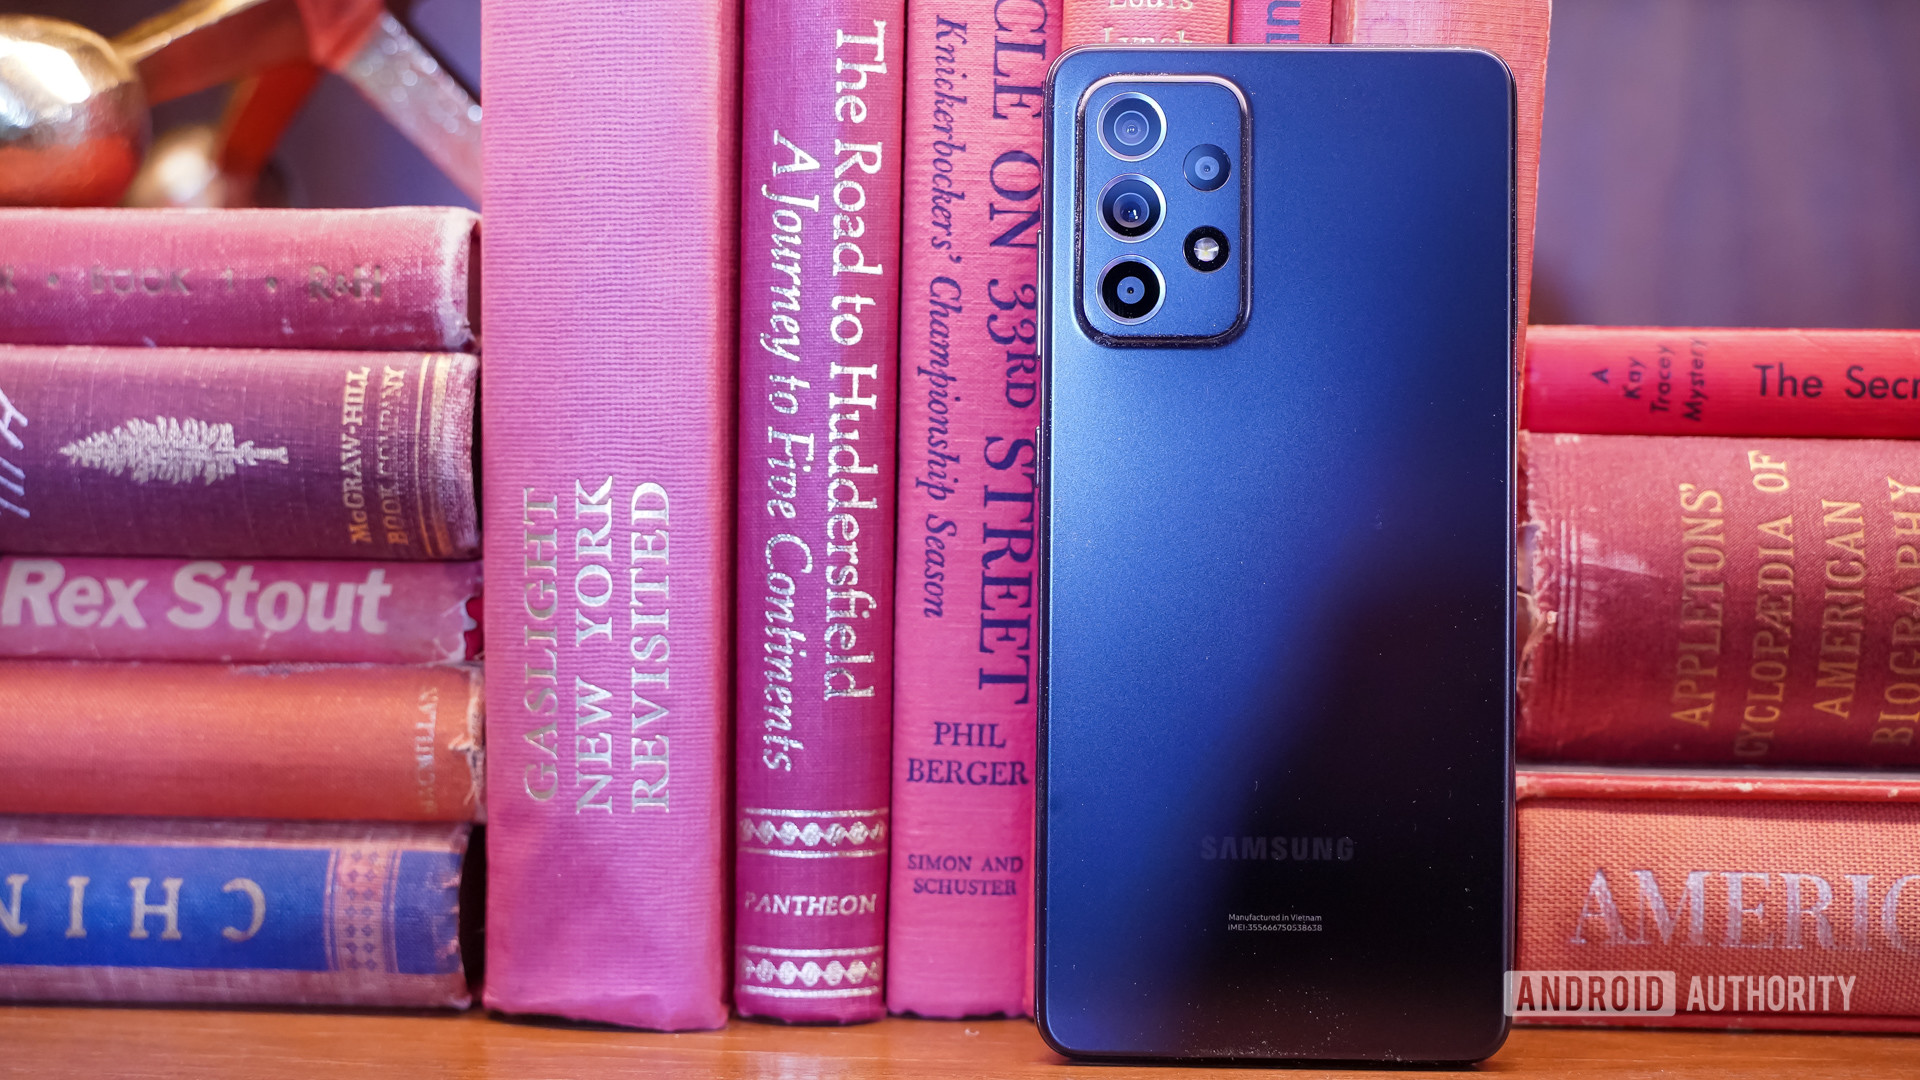 Samsung Galaxy A 52 5G rear with books